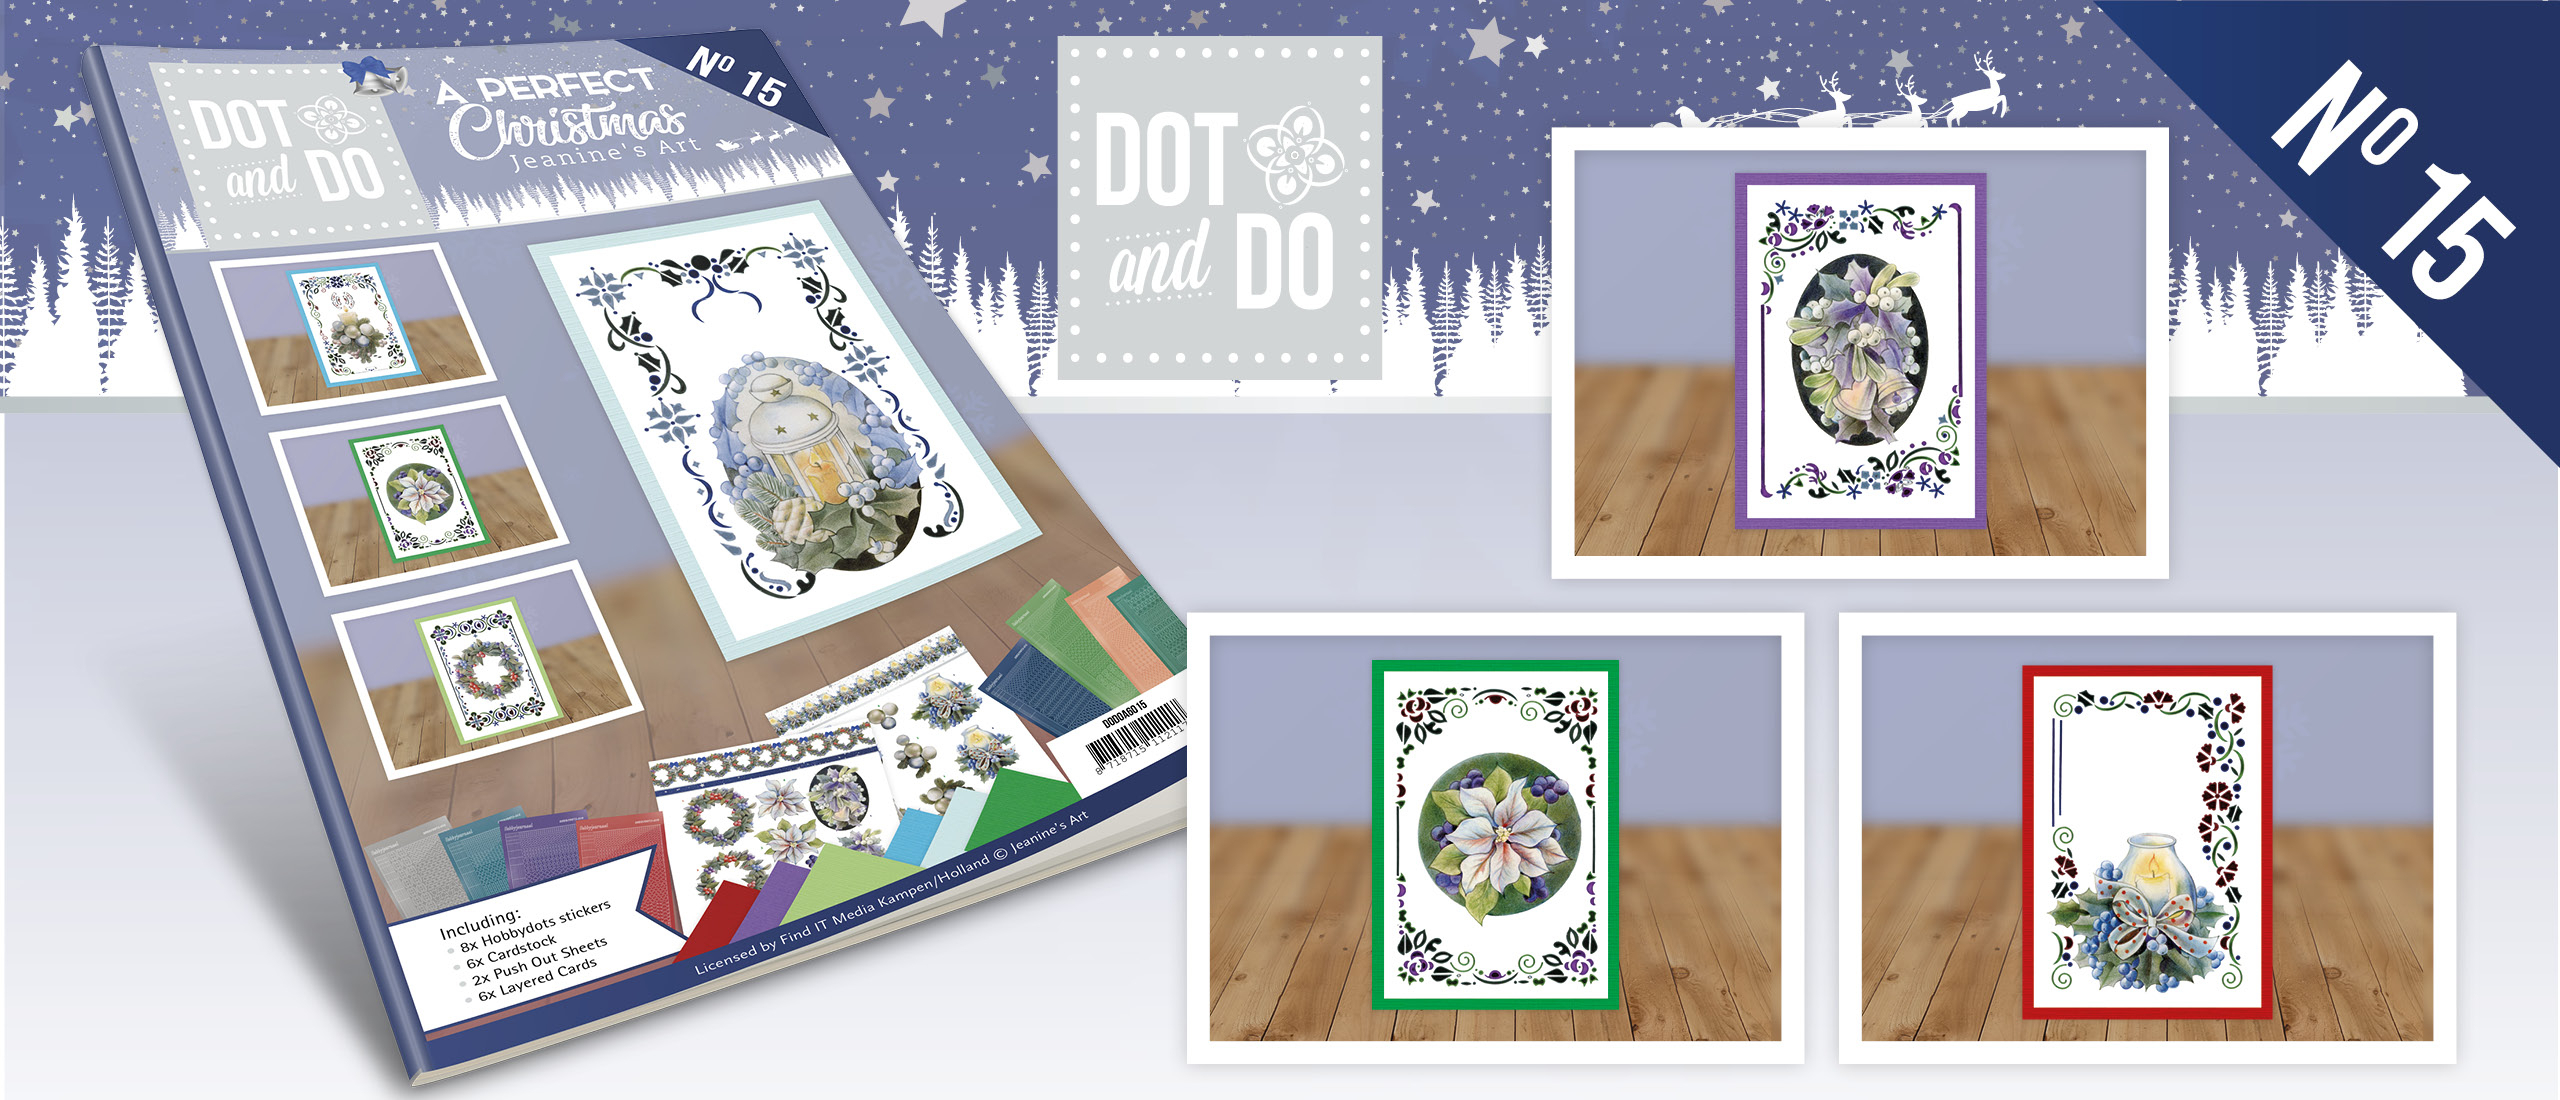 Dot and Do book 15 Jeanine’art – A Perfect Christmas (DODOA6015)